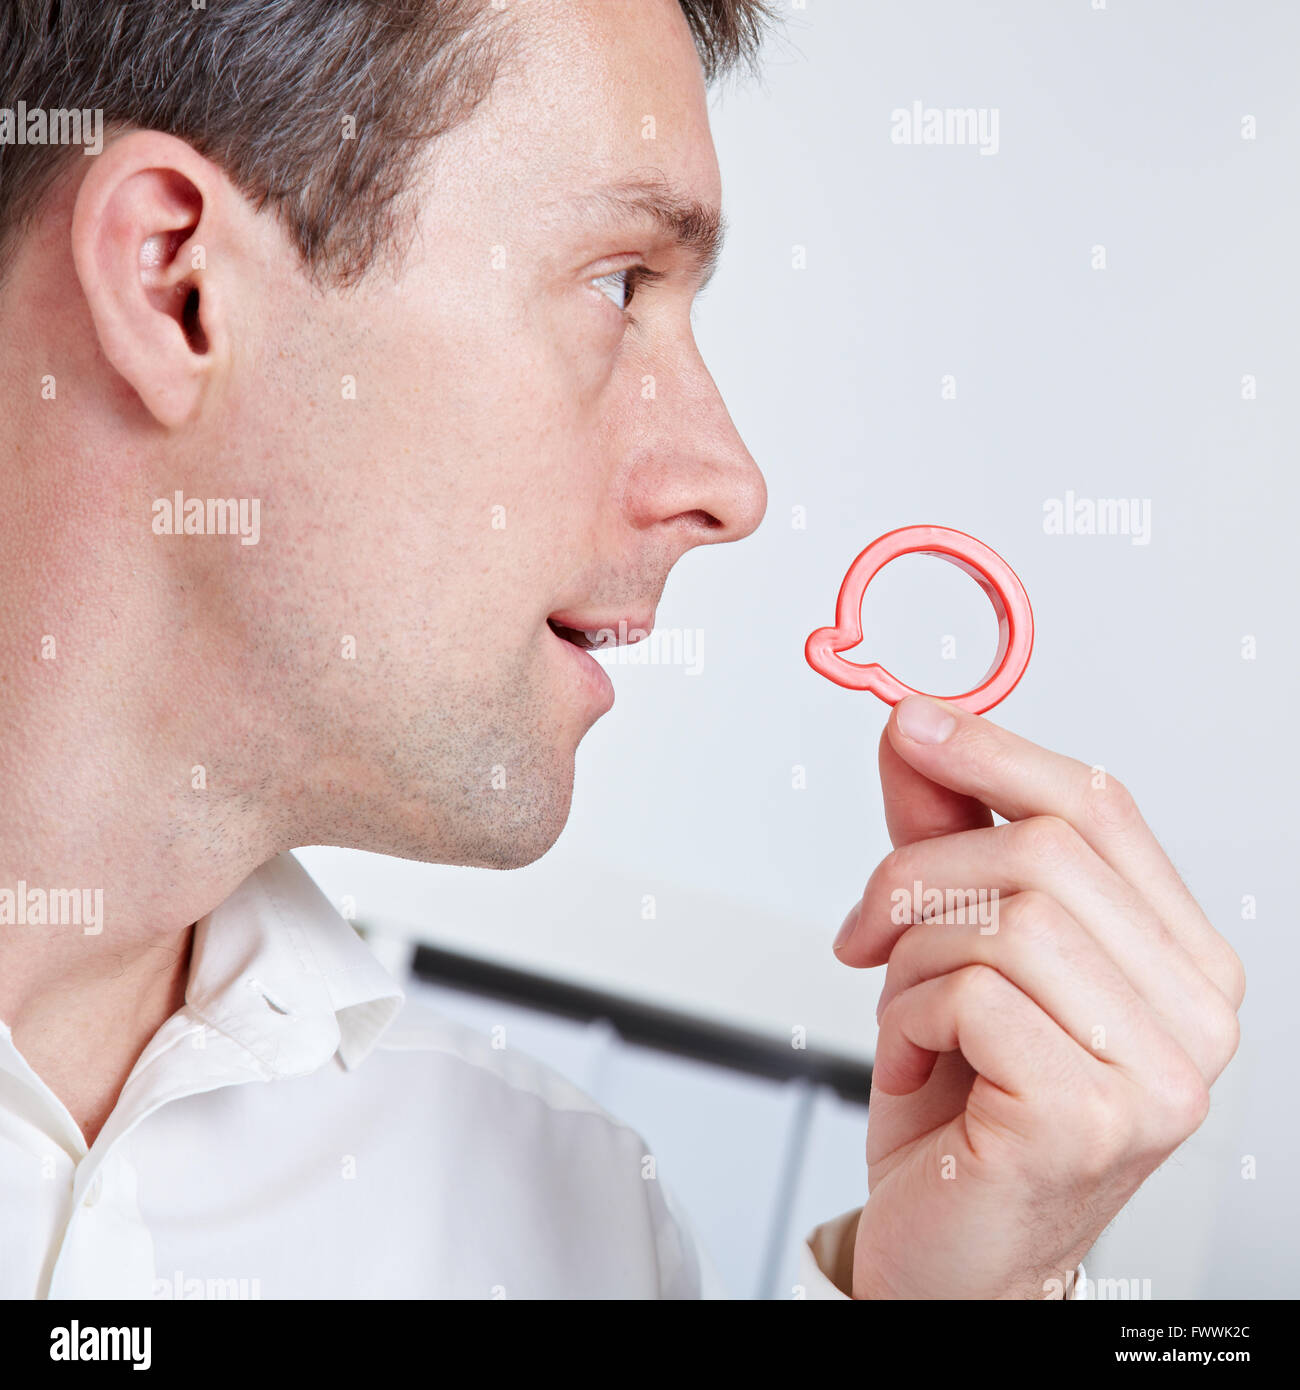 Business man holding speech balloon symbol near his mouth Stock Photo